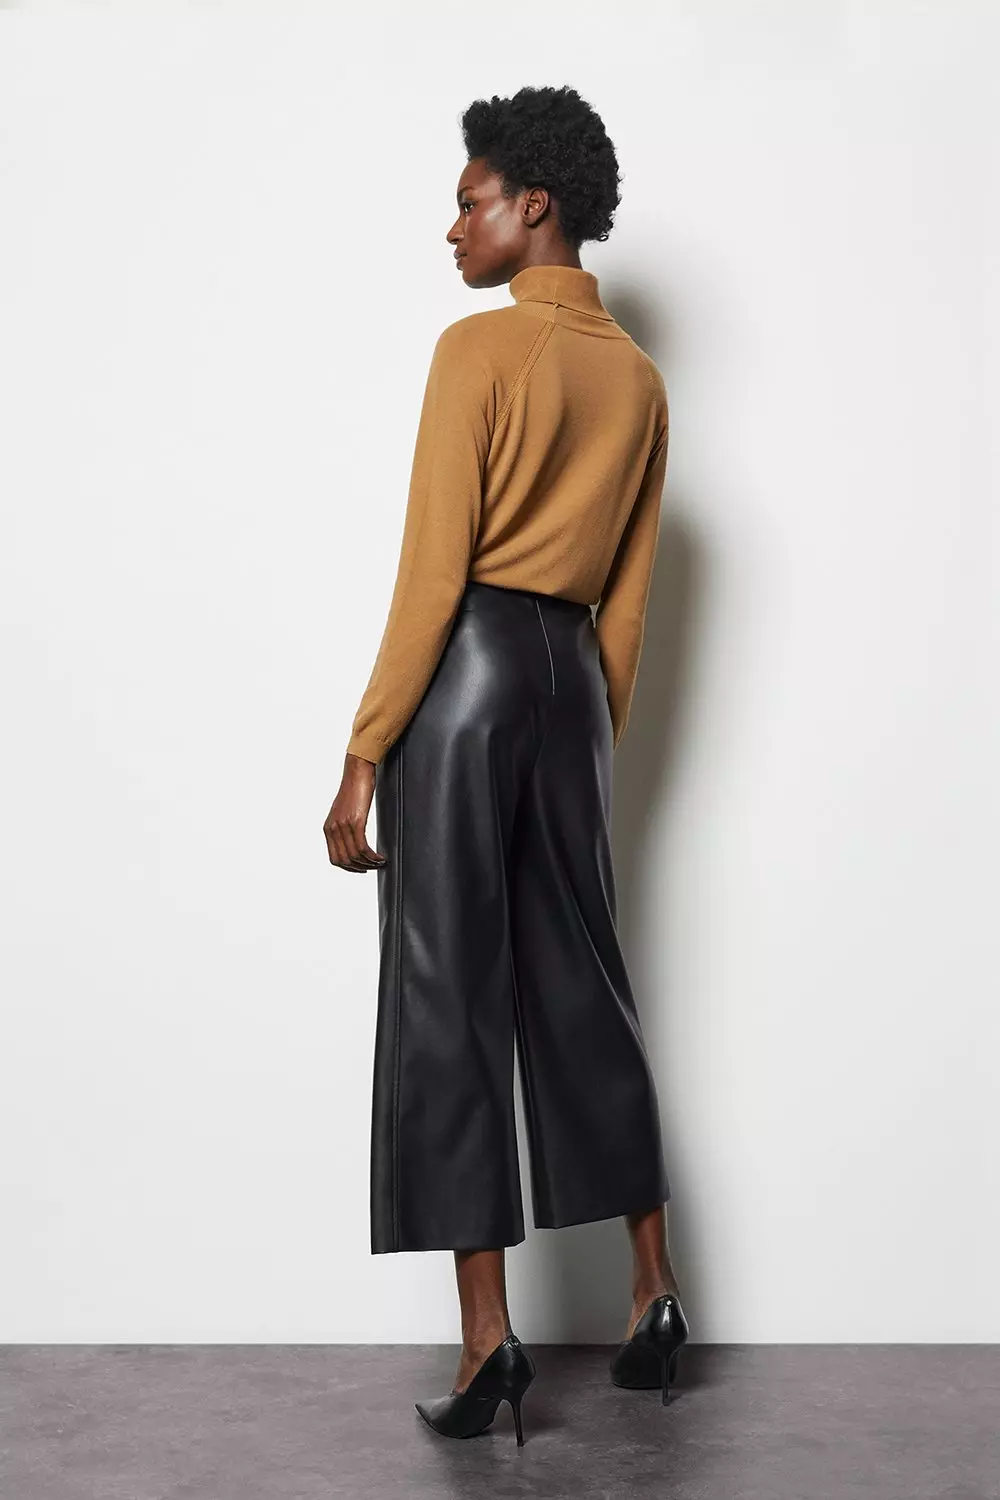 Women's Leather Pants, Explore our New Arrivals